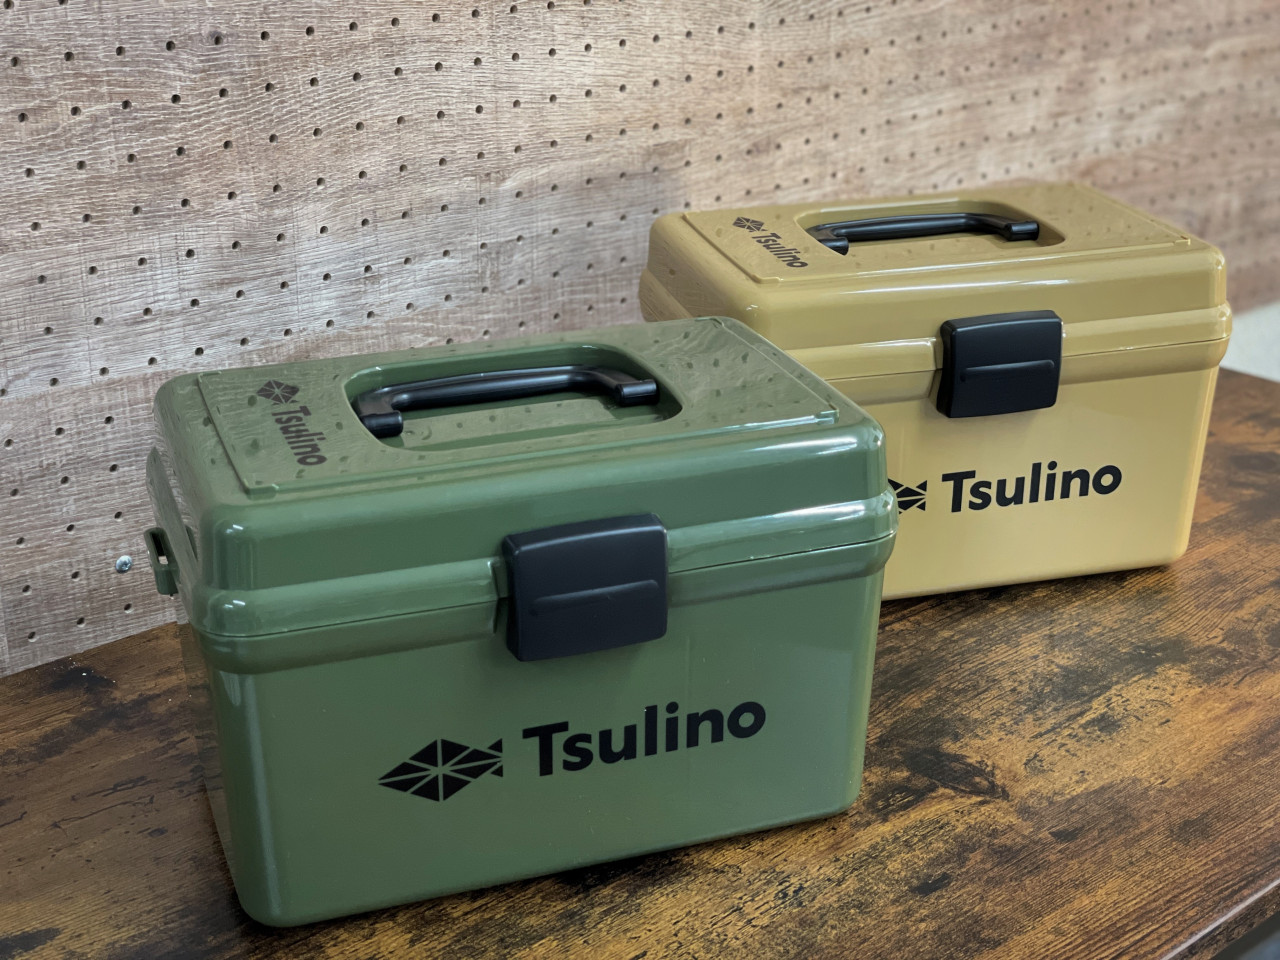 22tsulino新製品 コンパクトなのに収納力抜群のタックルボックス Tsulino Tough Box をリリース イシグロ バイヤー 釣具のイシグロ 釣り情報サイト